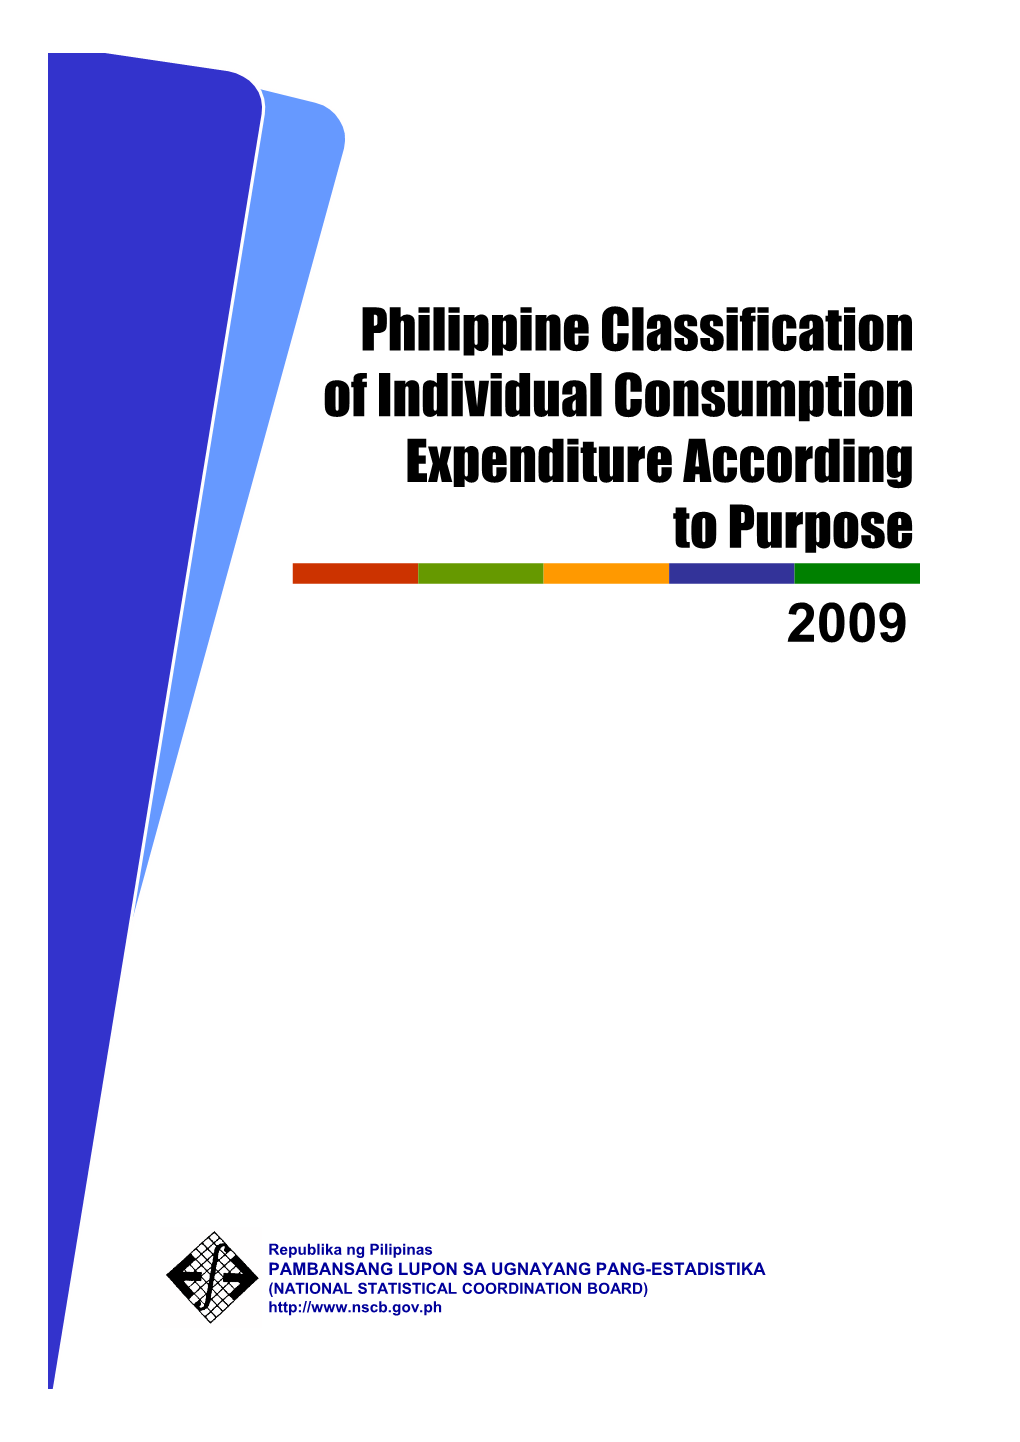 Philippine Classification of Individual Consumption Expenditure According to Purpose 2009